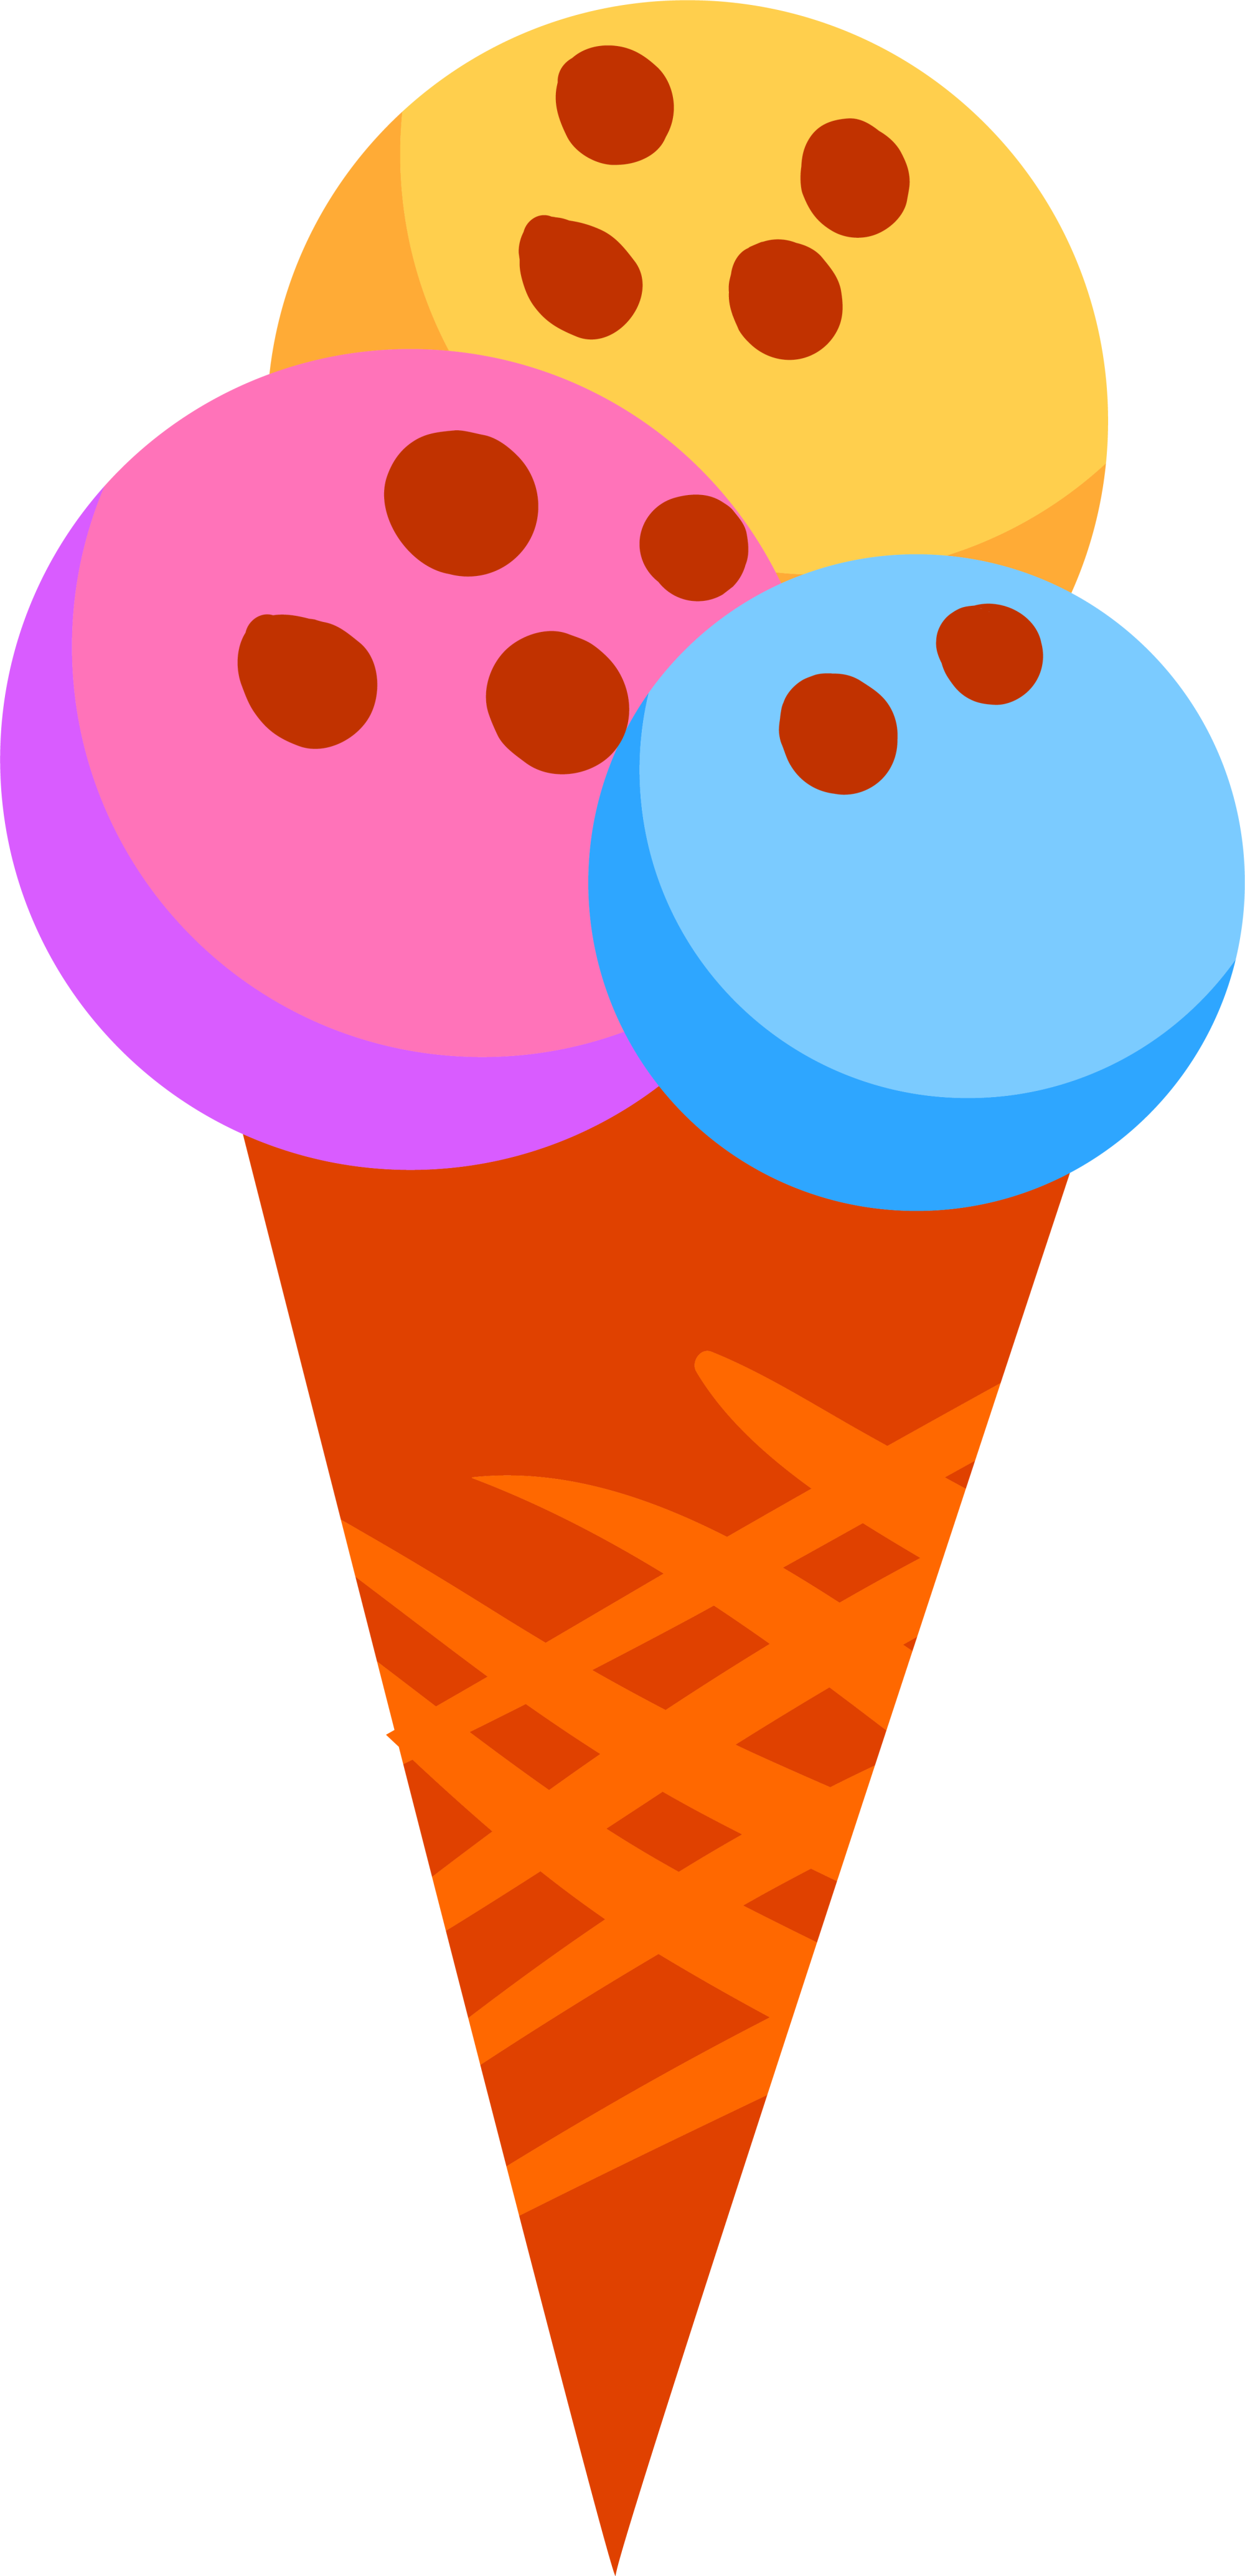 icecream clipart colorful